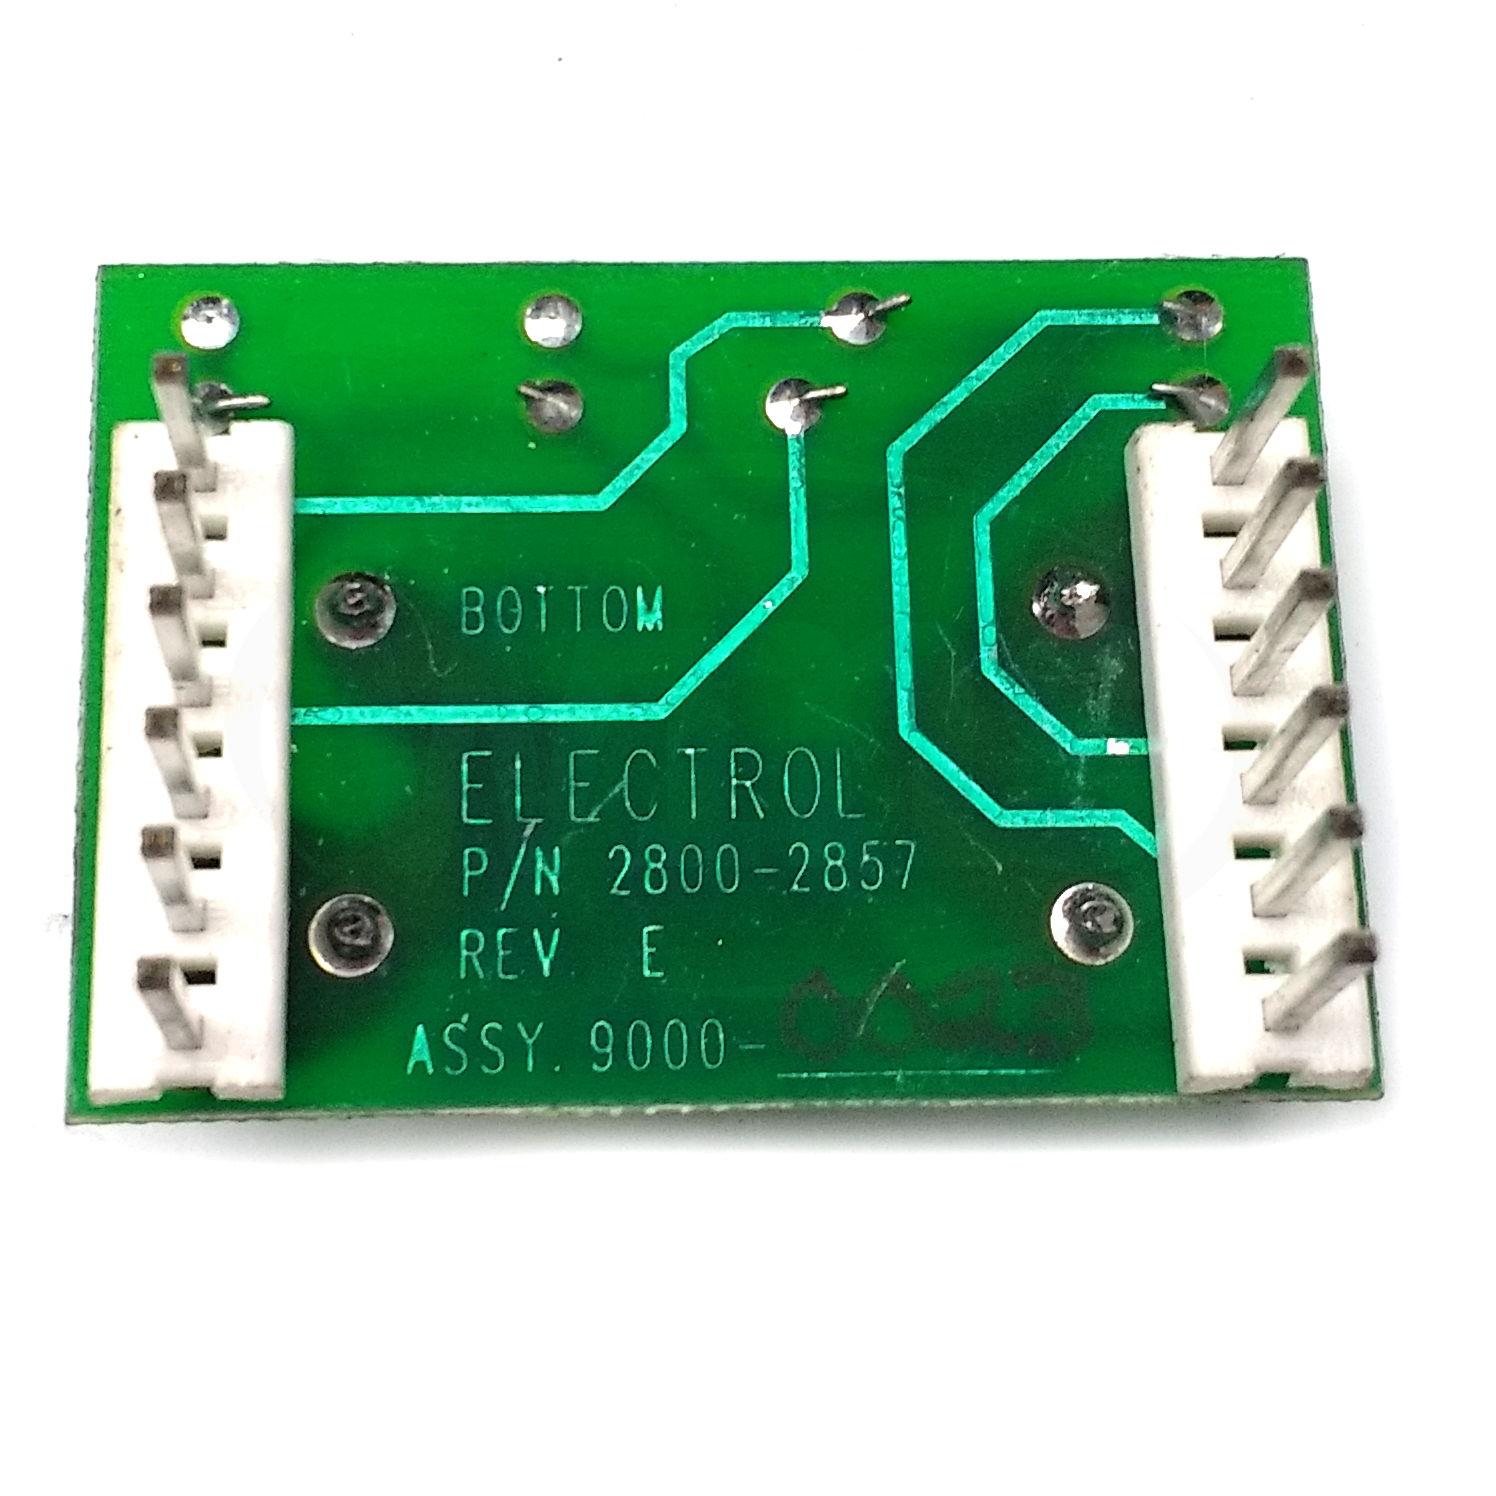 9000-0023 Electrol I R Module, 1/3-1/2HP, 115V 2